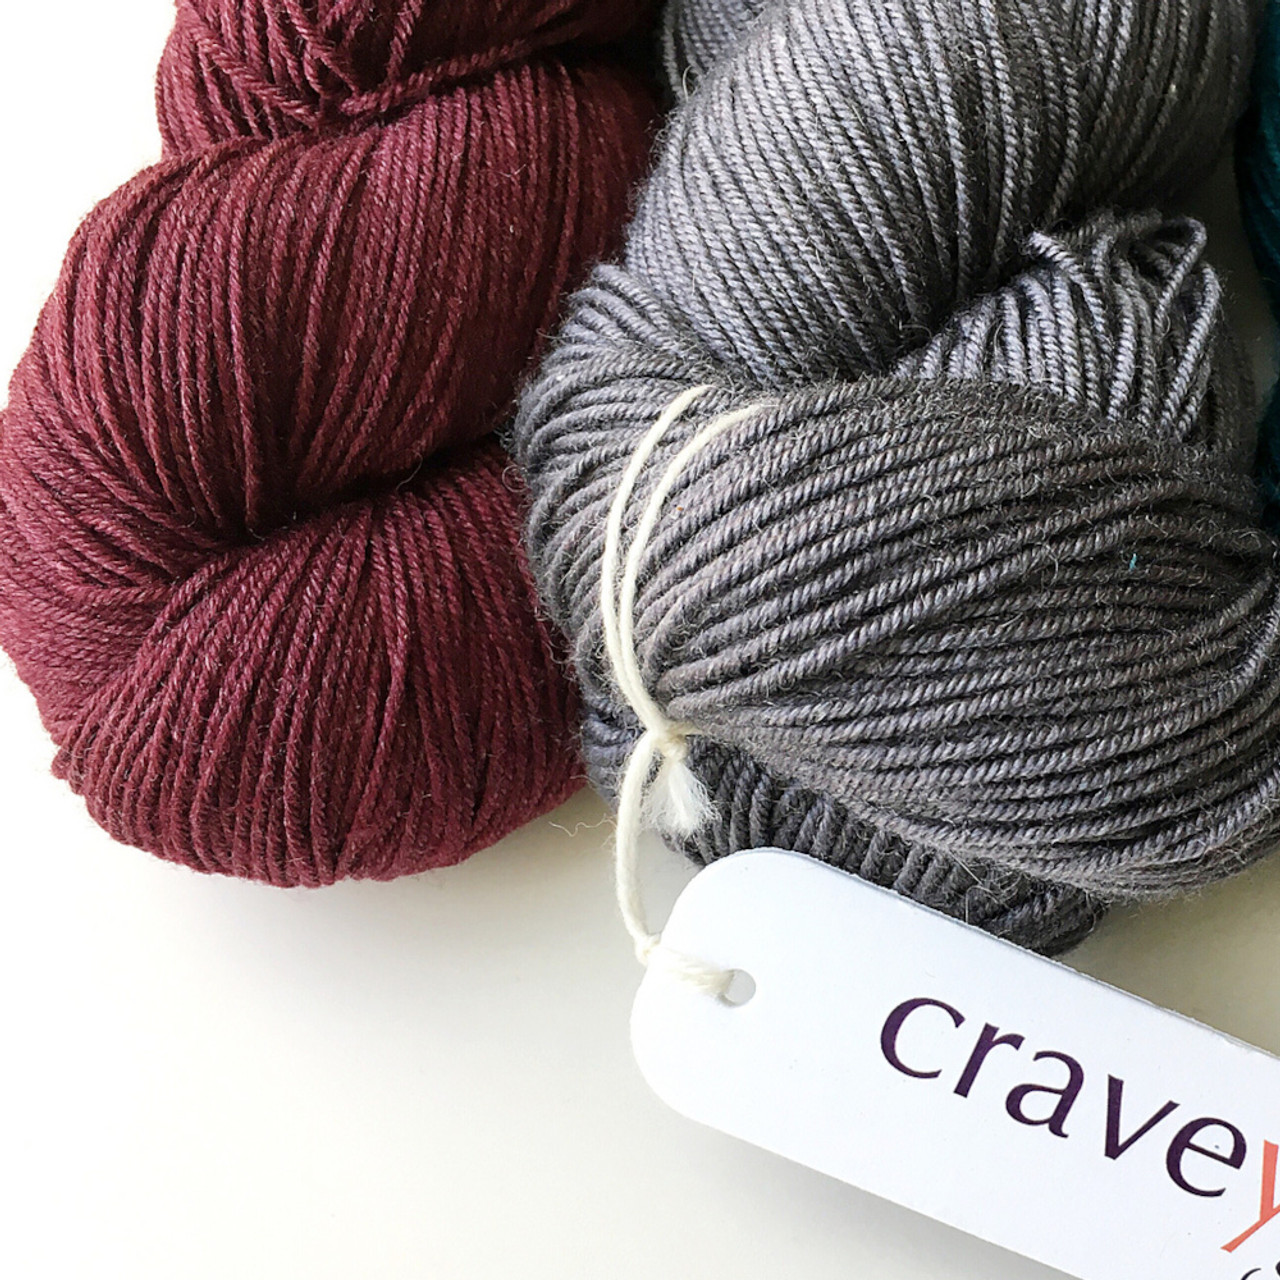 Crave Yarn - Caravan DK